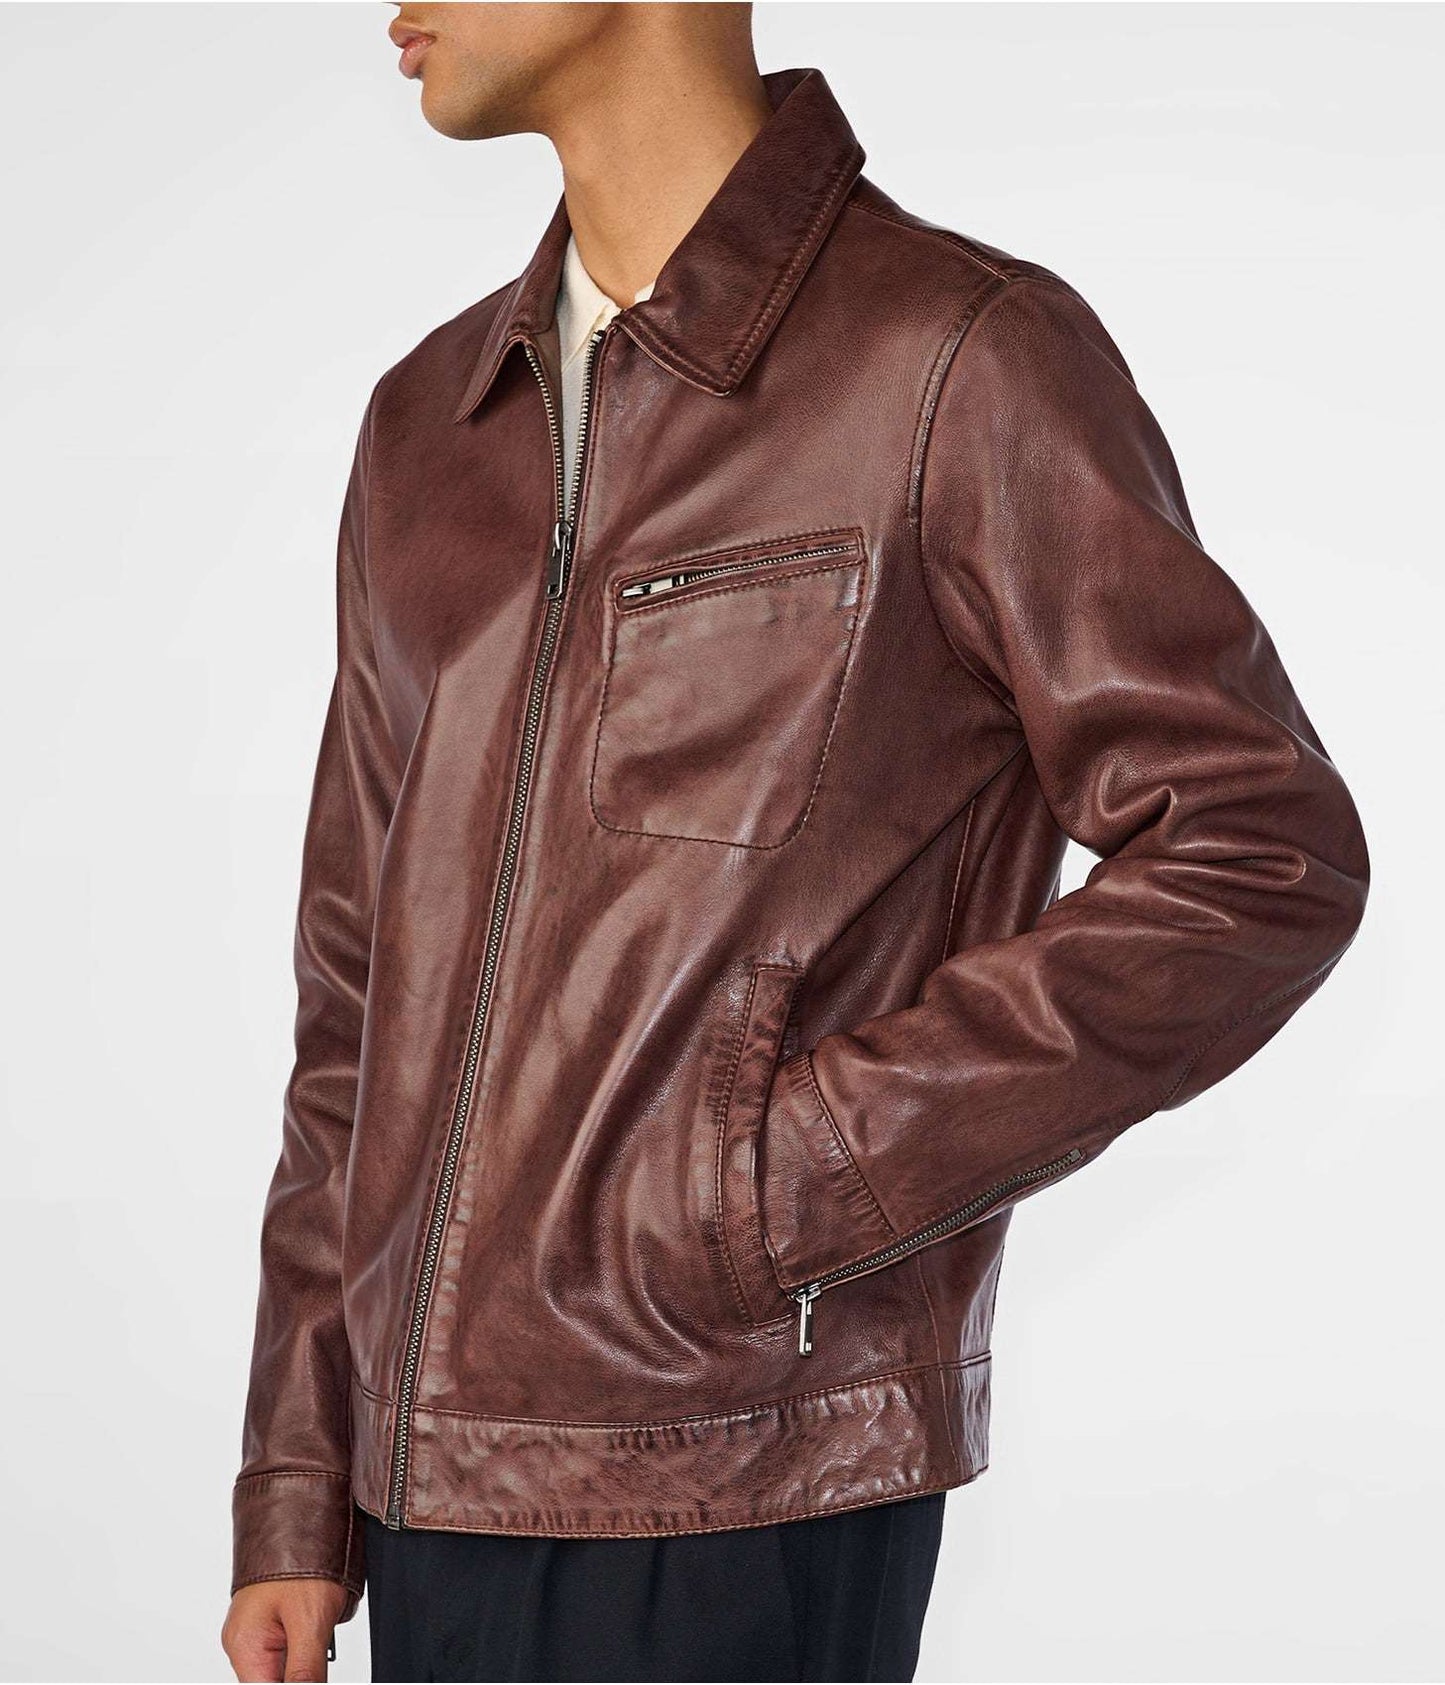 Men's Distressed Leather Jacket In Dark Brown